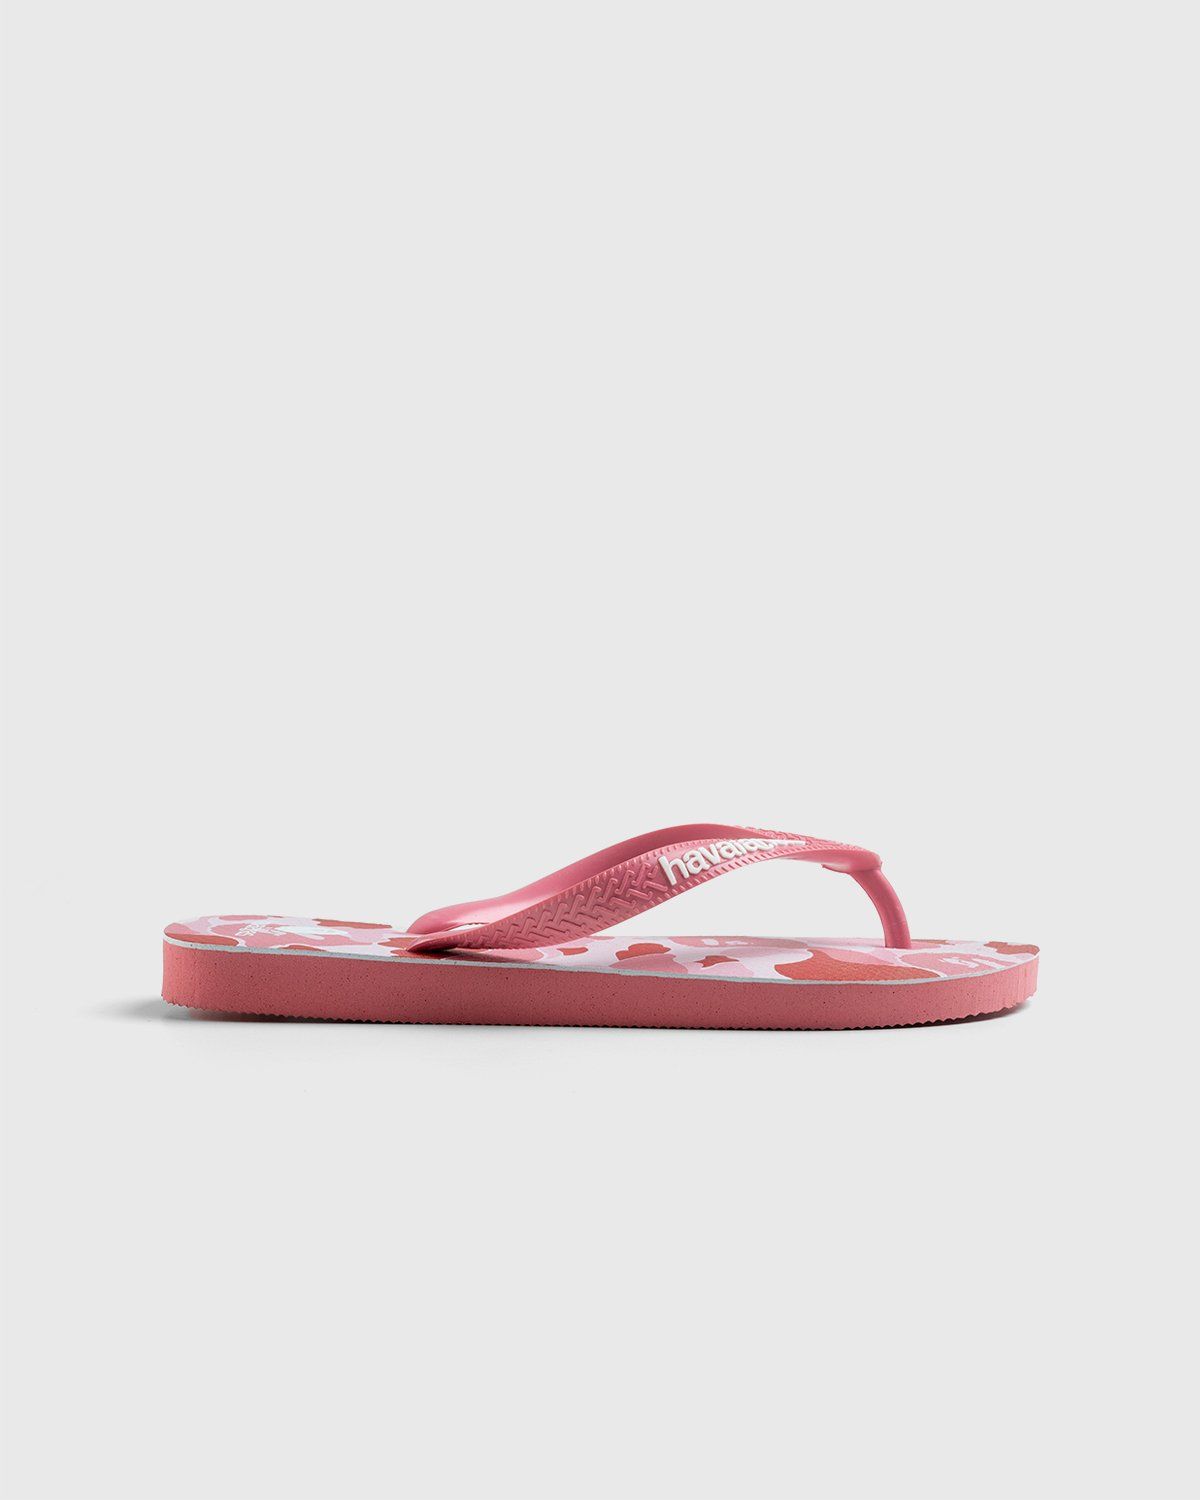 BAPE – Top Pink - Flip Flops - Pink - Image 1